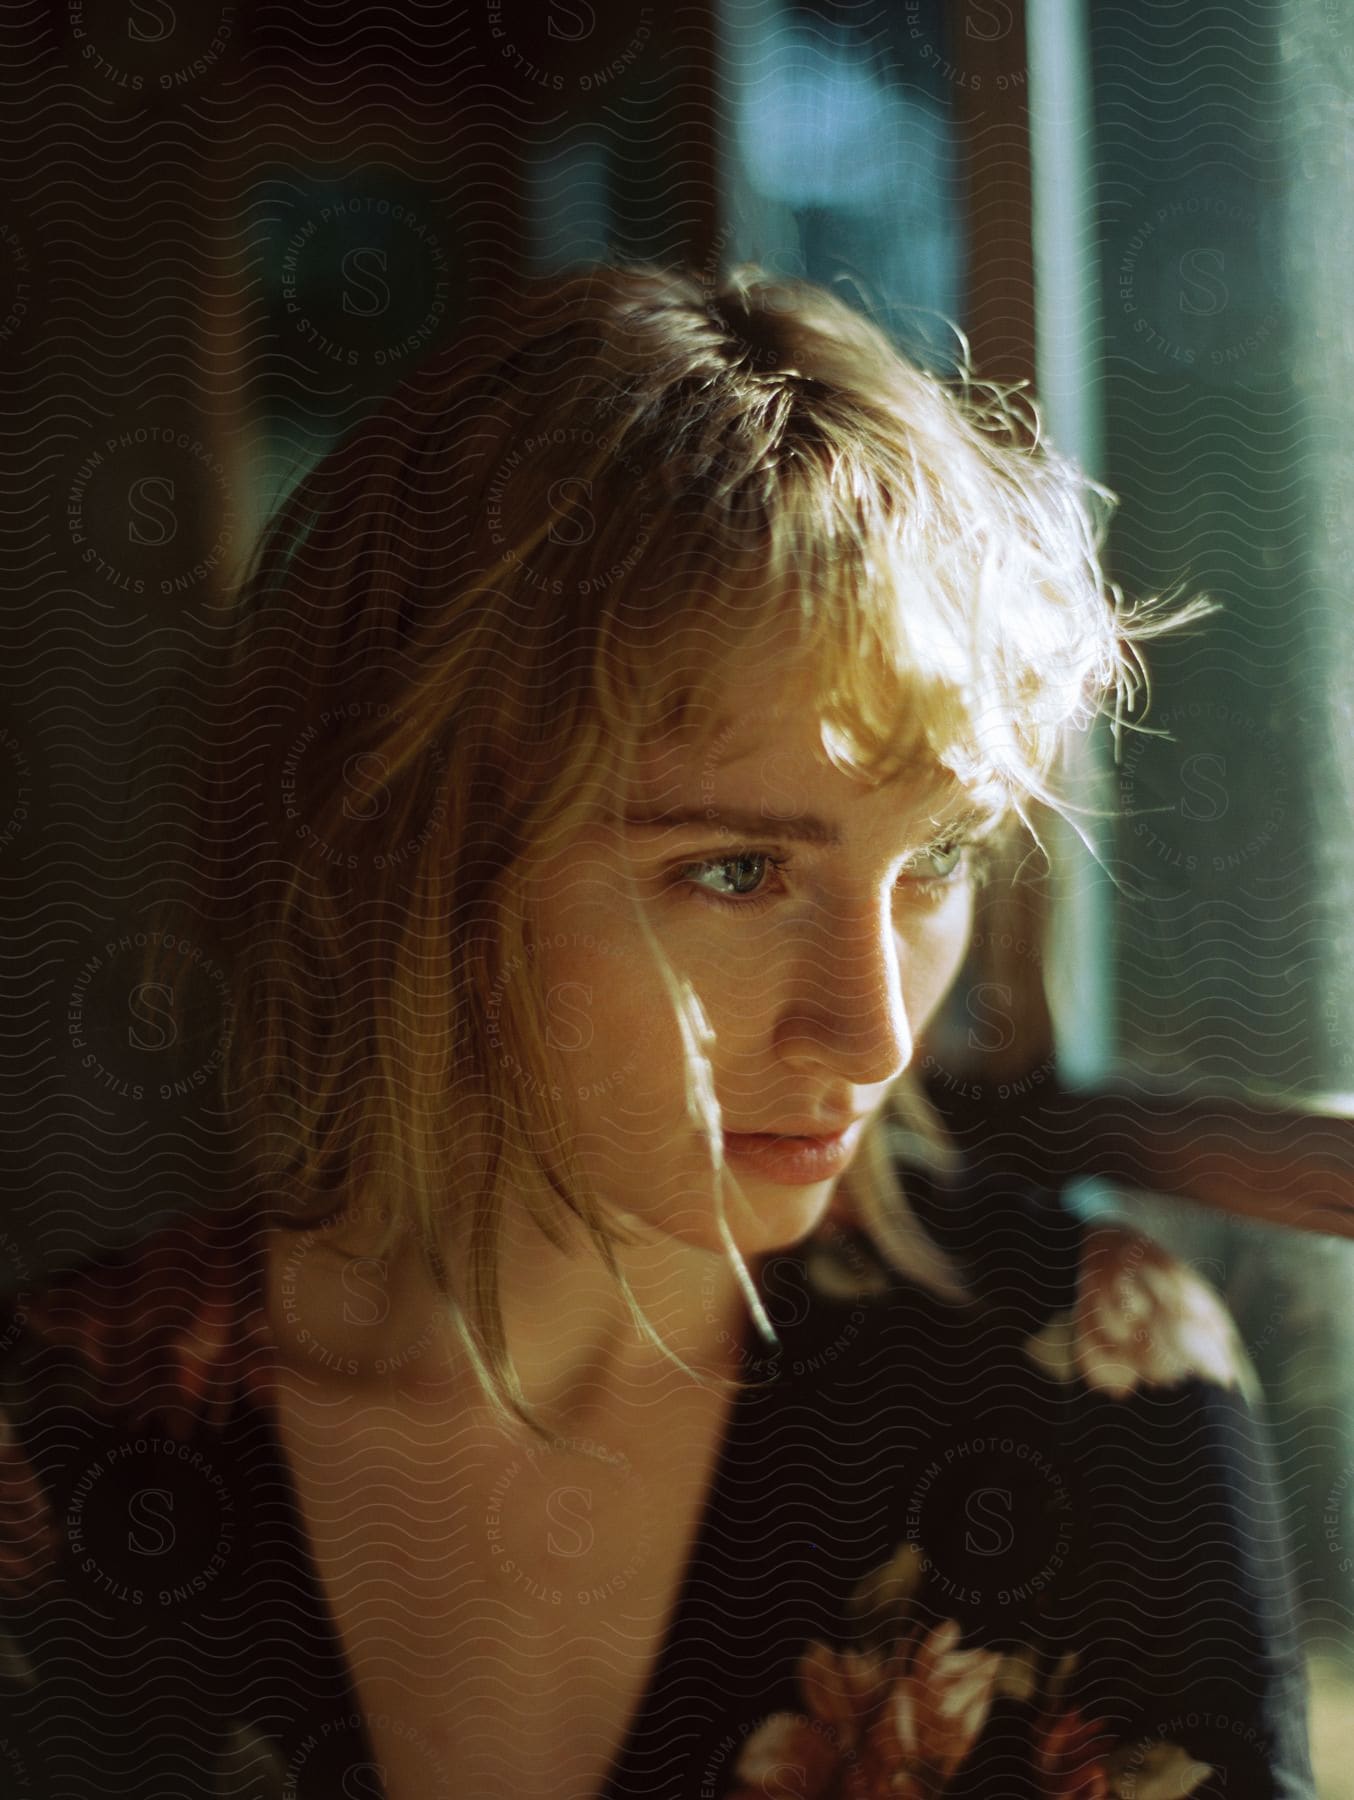 A woman looks ahead as she sits near windows